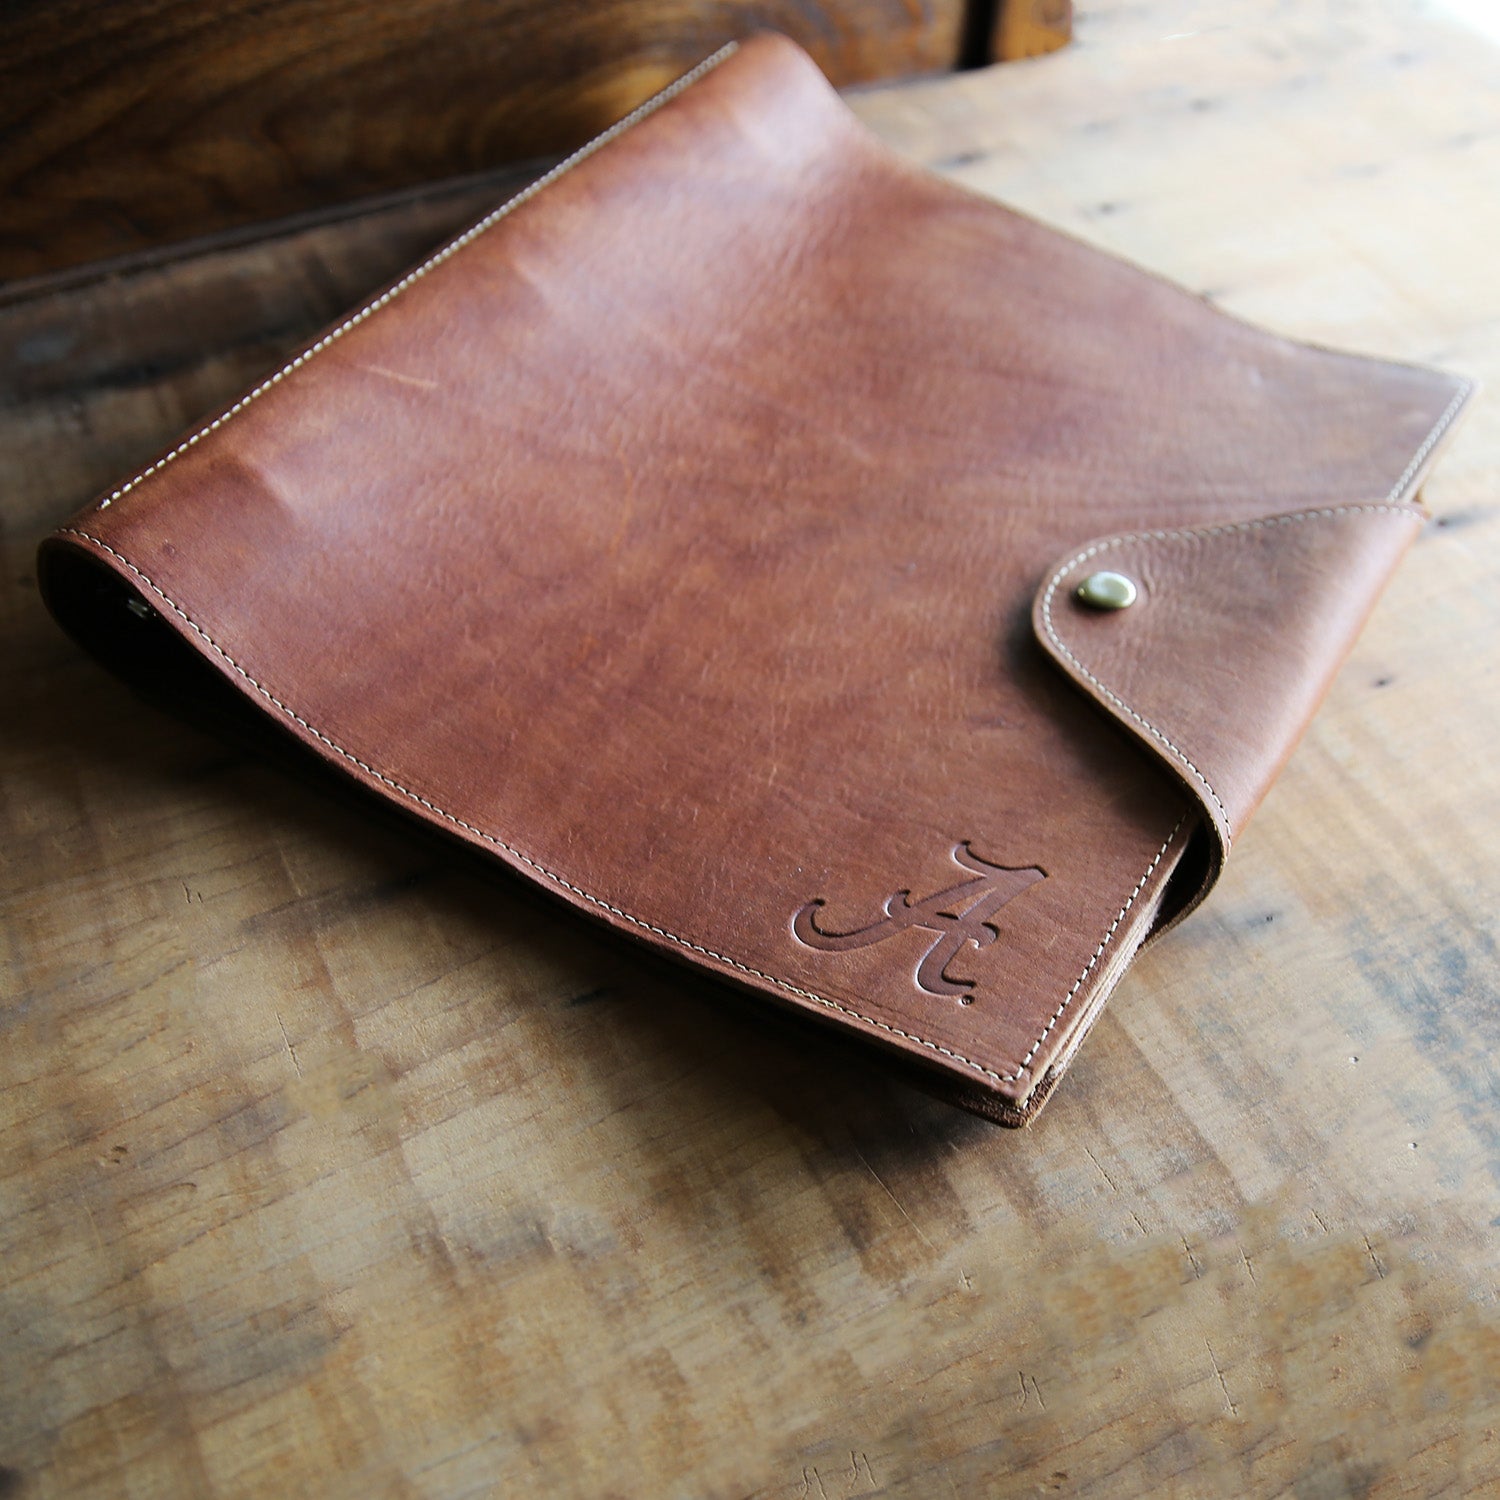 Fine leather 3 ring 1.5" binder notebook with Alabama logo